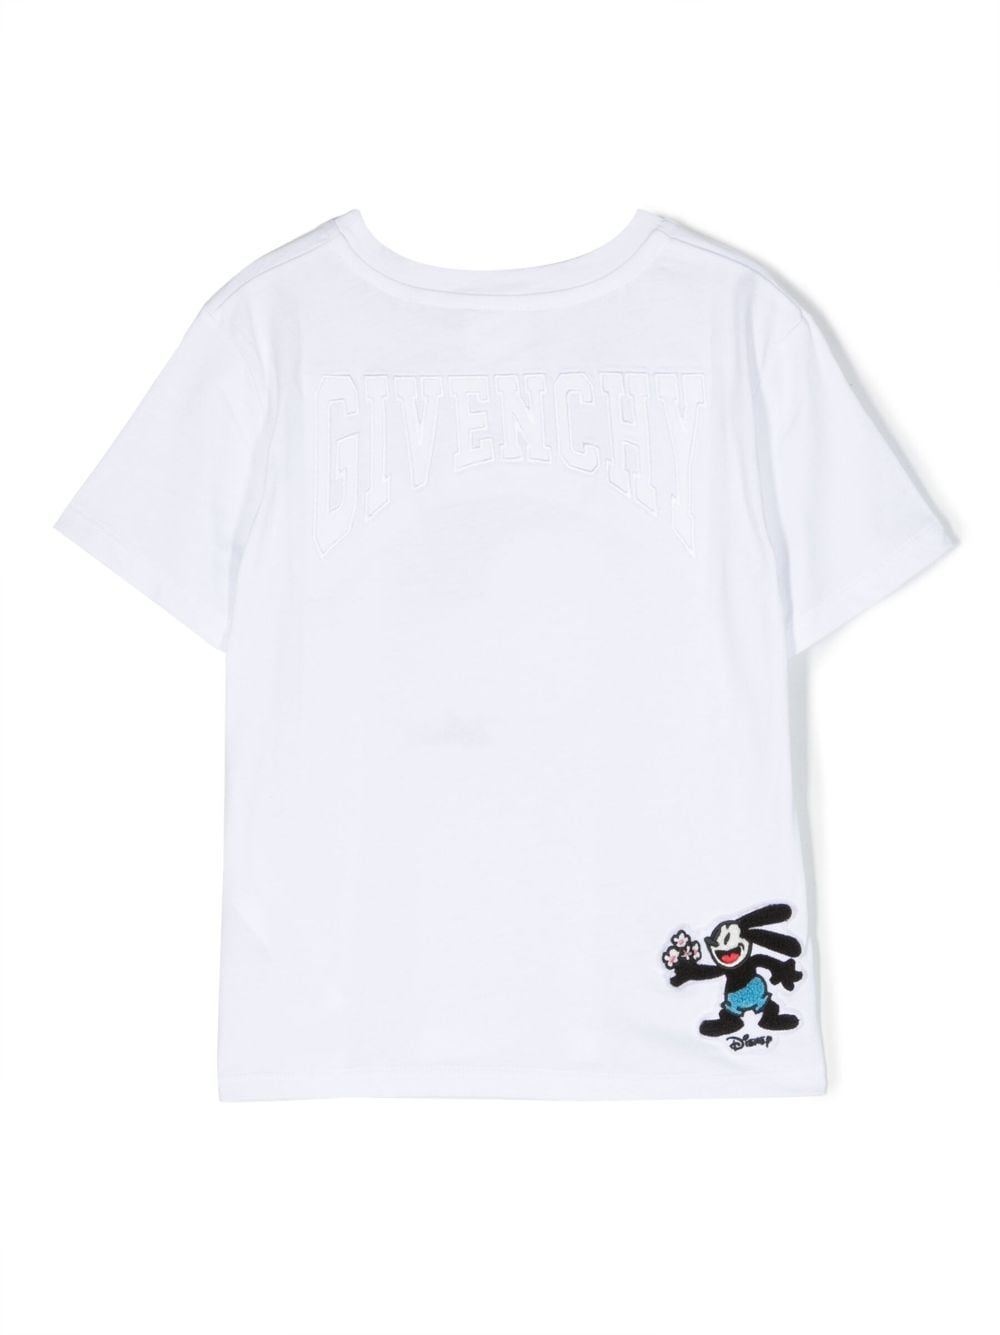 T-shirt bianca bambina con stampa